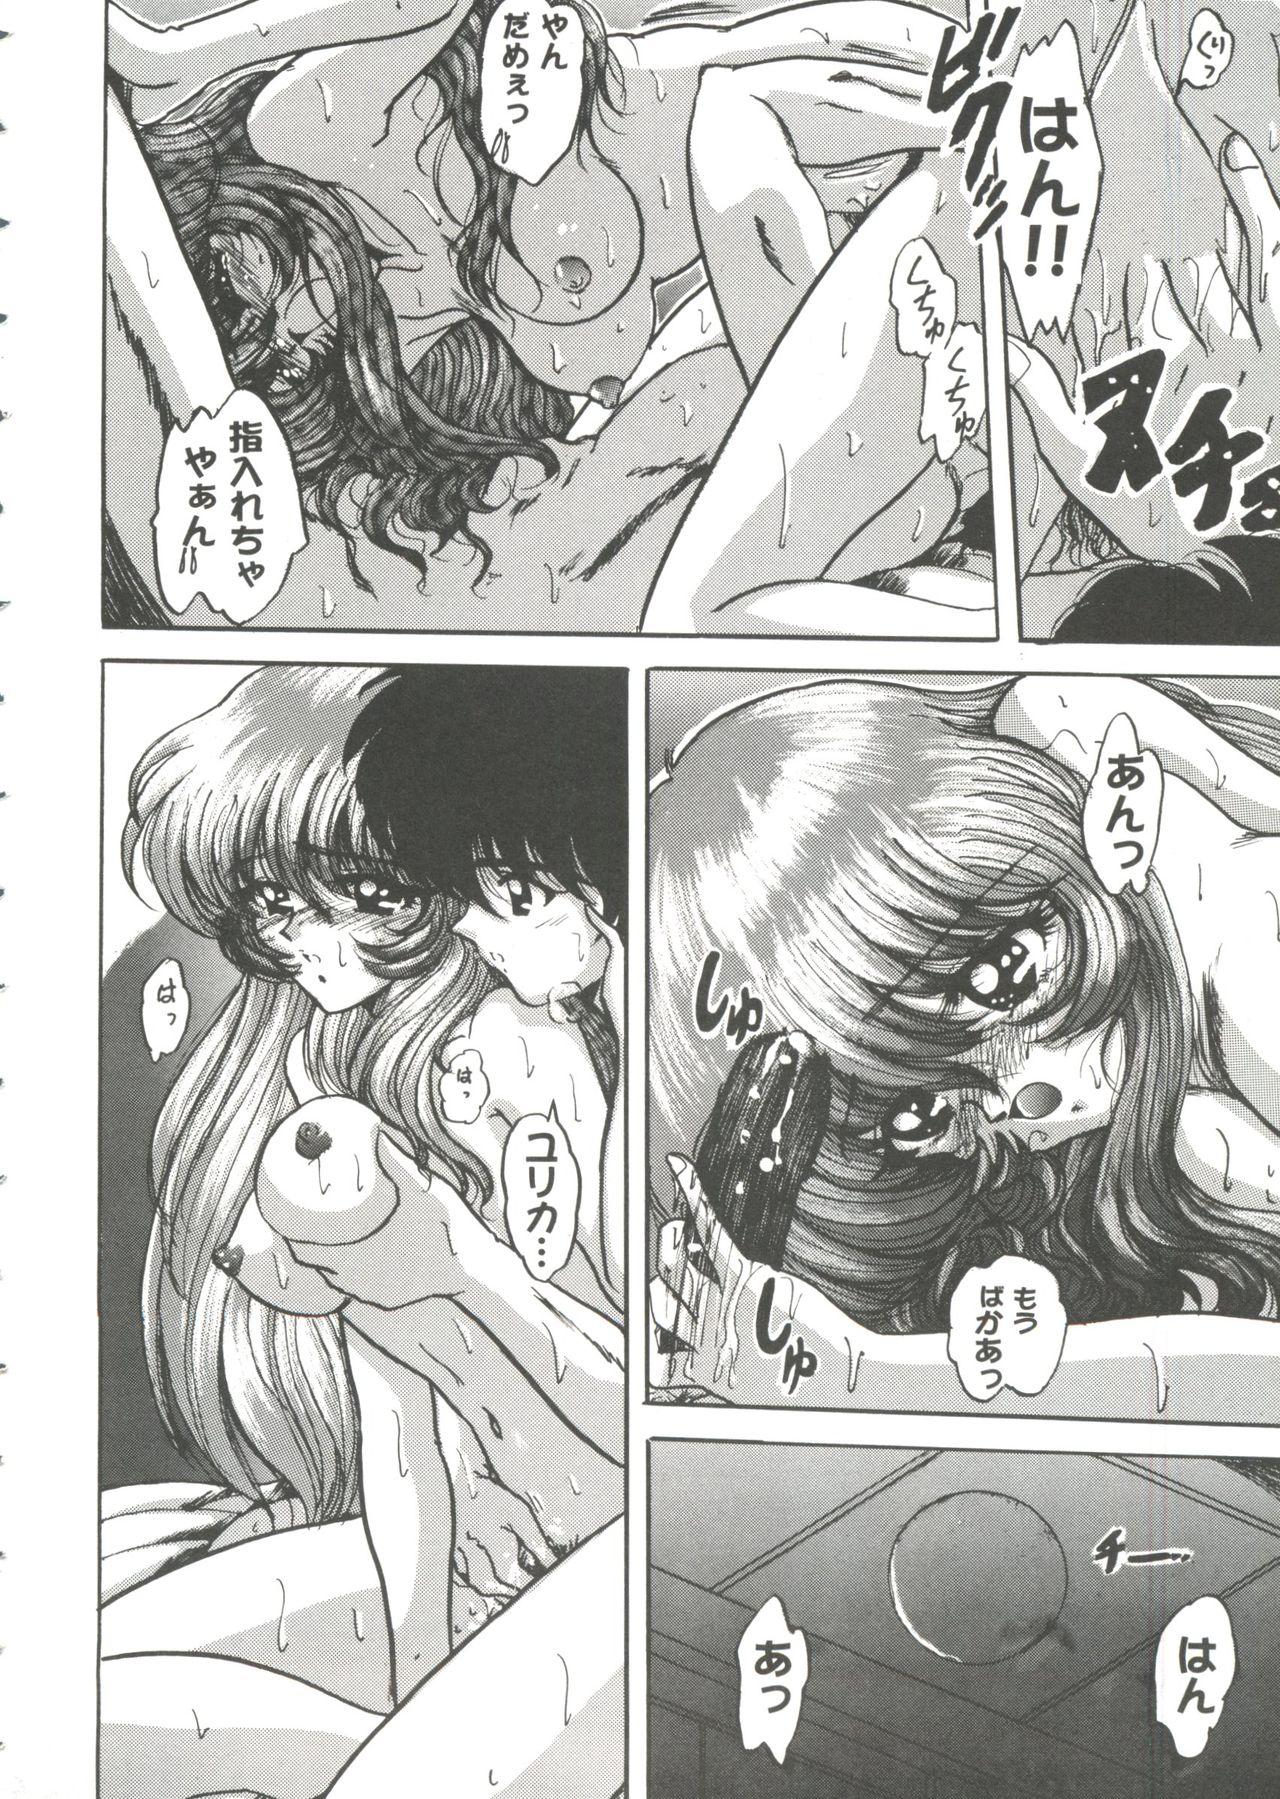 Sapphic Girl's Parade 99 Cut 7 - Sakura taisen Martian successor nadesico Rurouni kenshin White album Pantyhose - Page 8